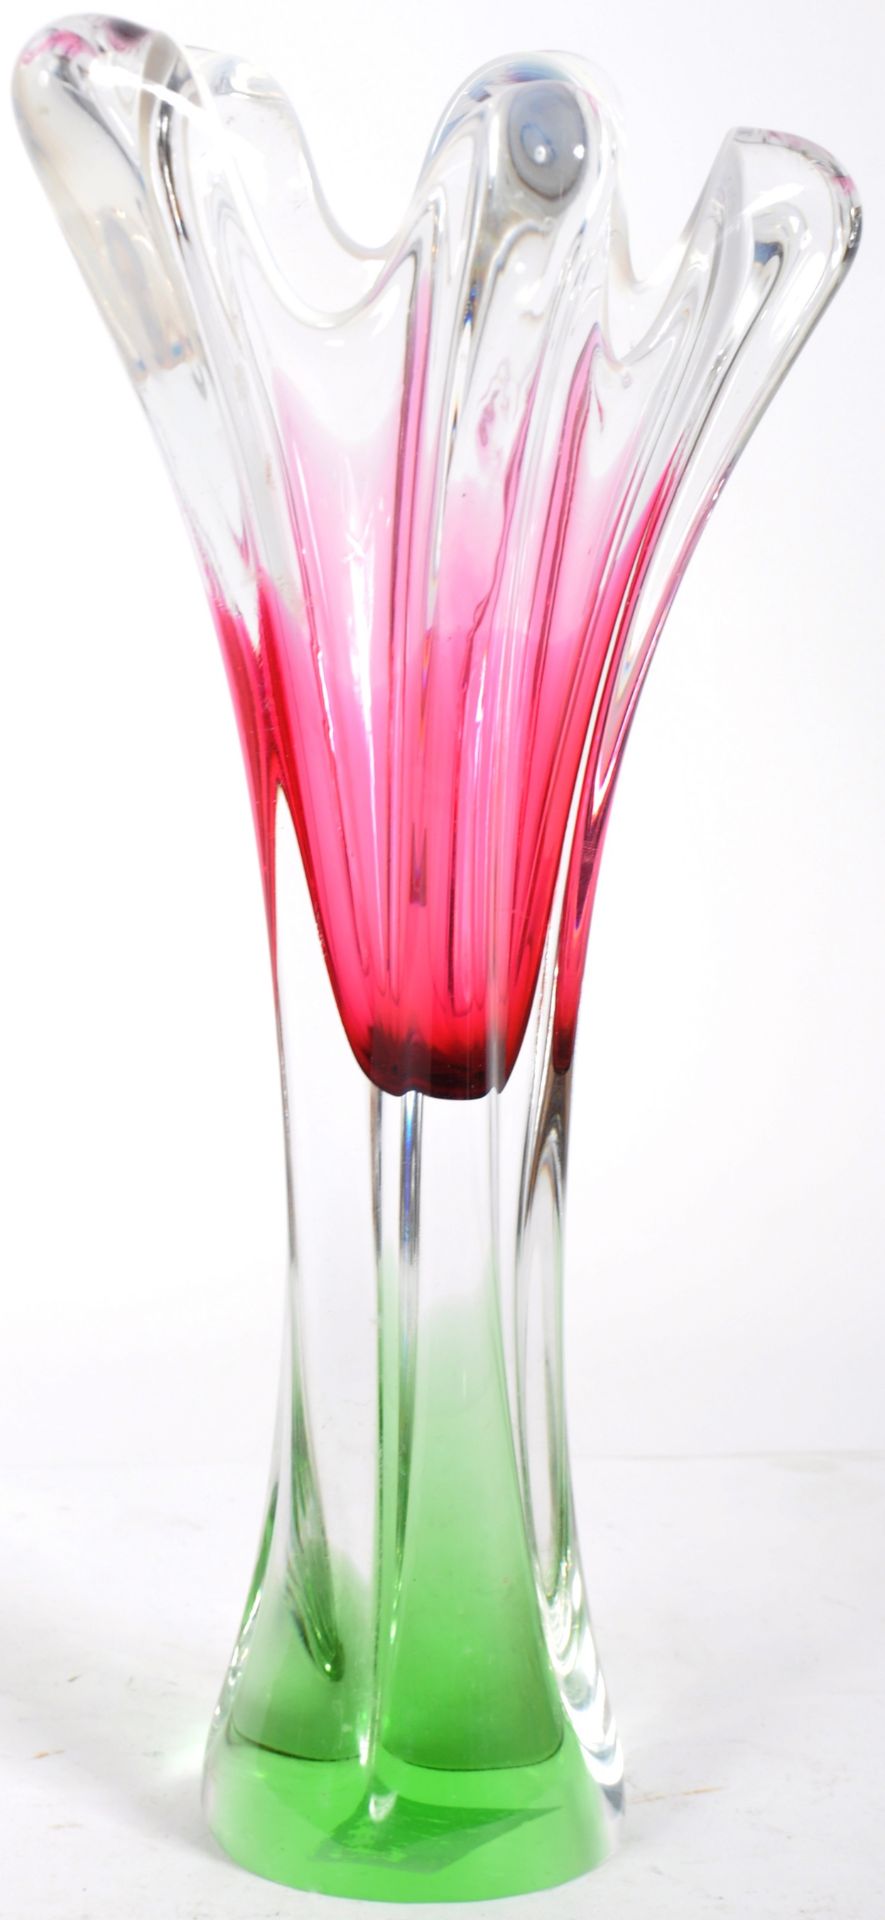 HOSPODKA FOR SKLO UNION - RETRO STUDIO ART GLASS VASE - Image 3 of 9